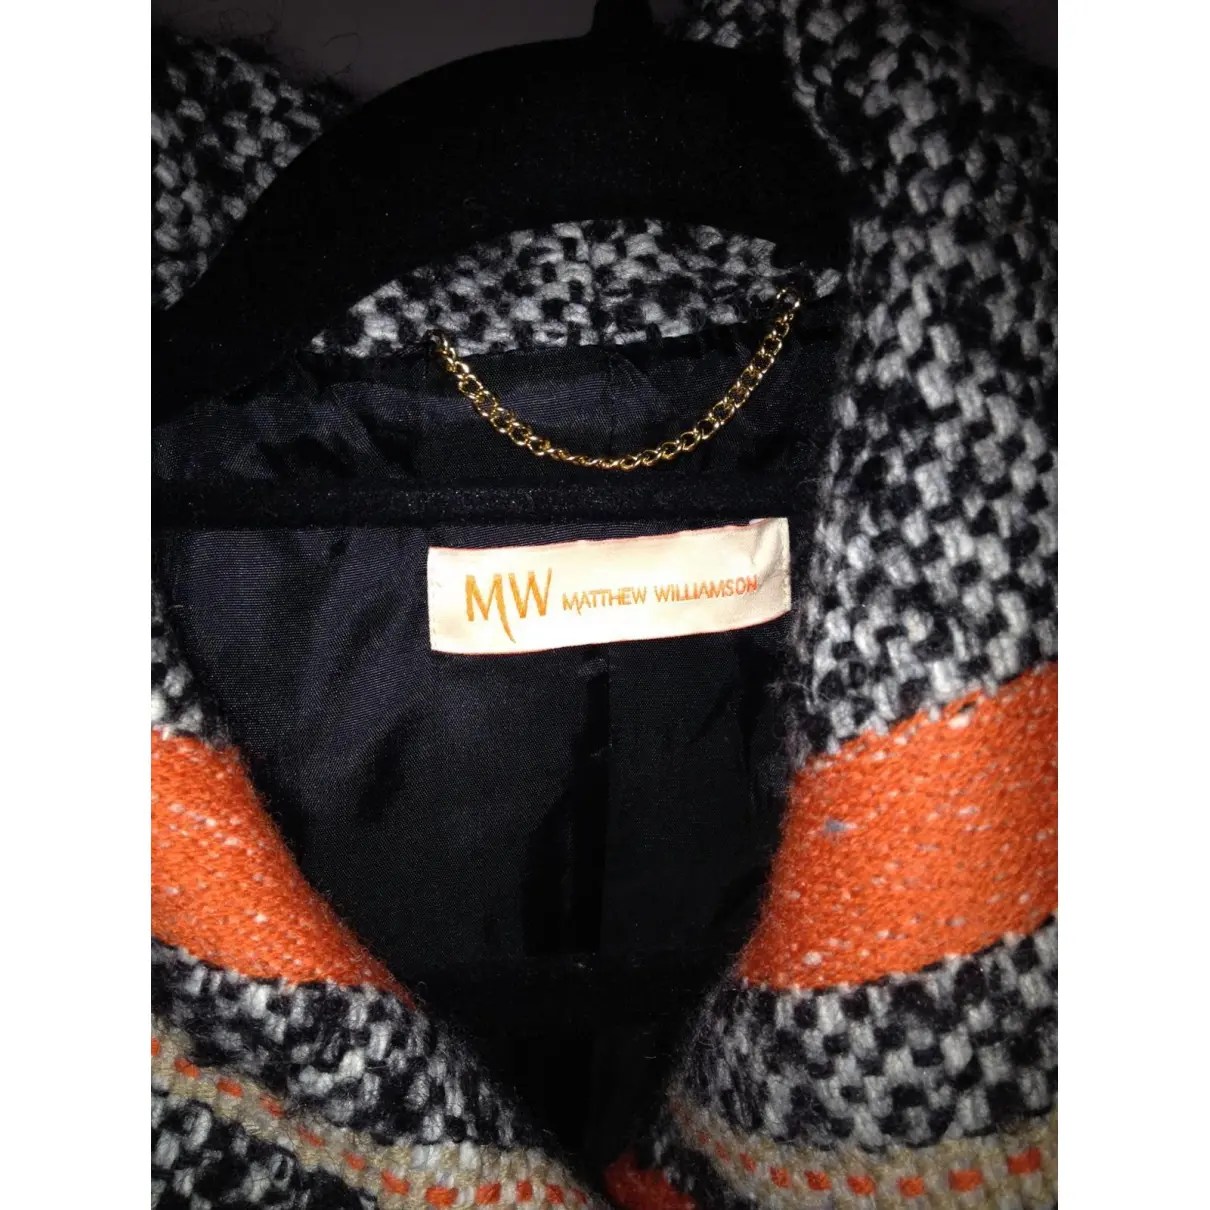 Buy Matthew Williamson Wool jacket online